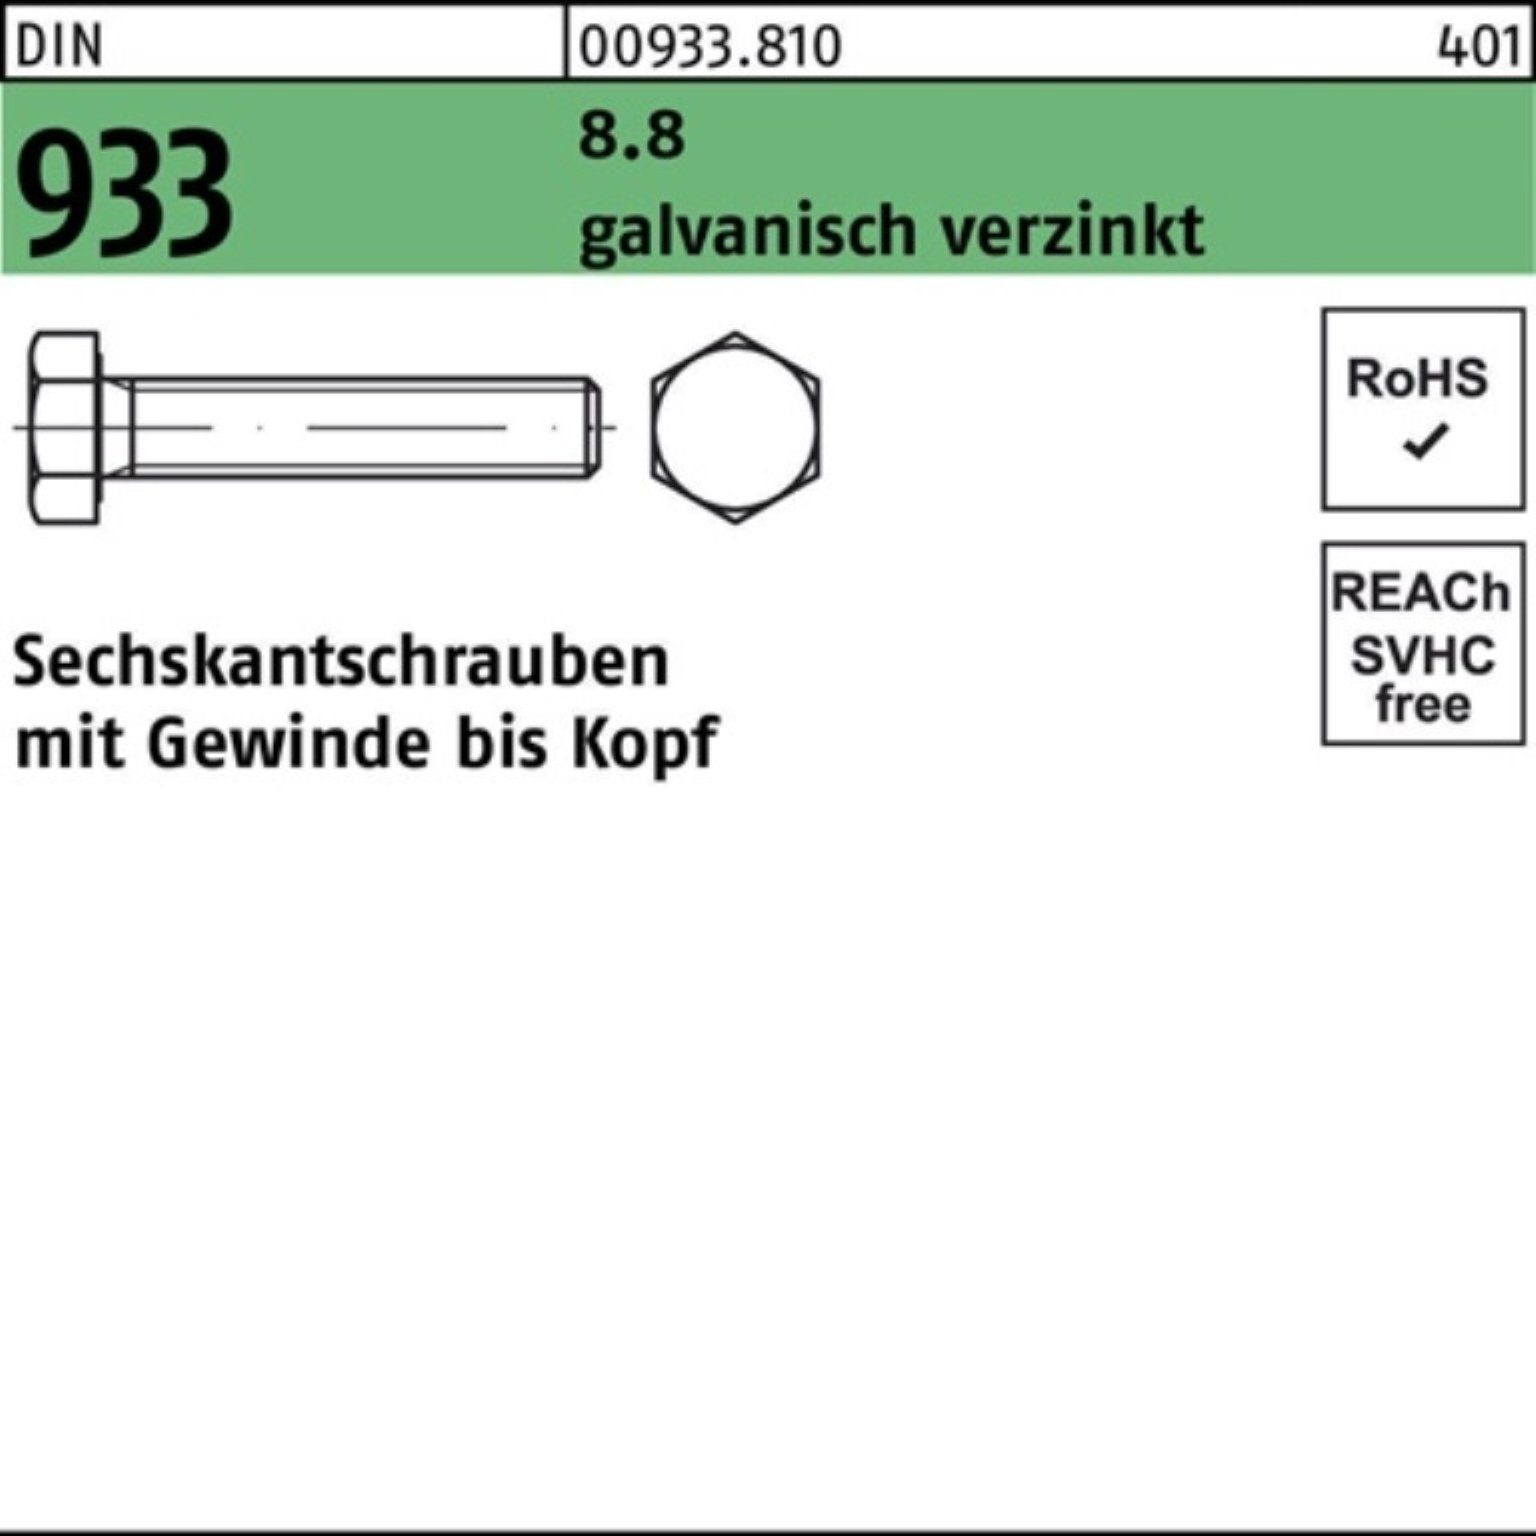 Reyher Sechskantschraube 100er Pack Sechskantschraube 933 55 Stü 50 galv.verz. 8.8 DIN M16x VG